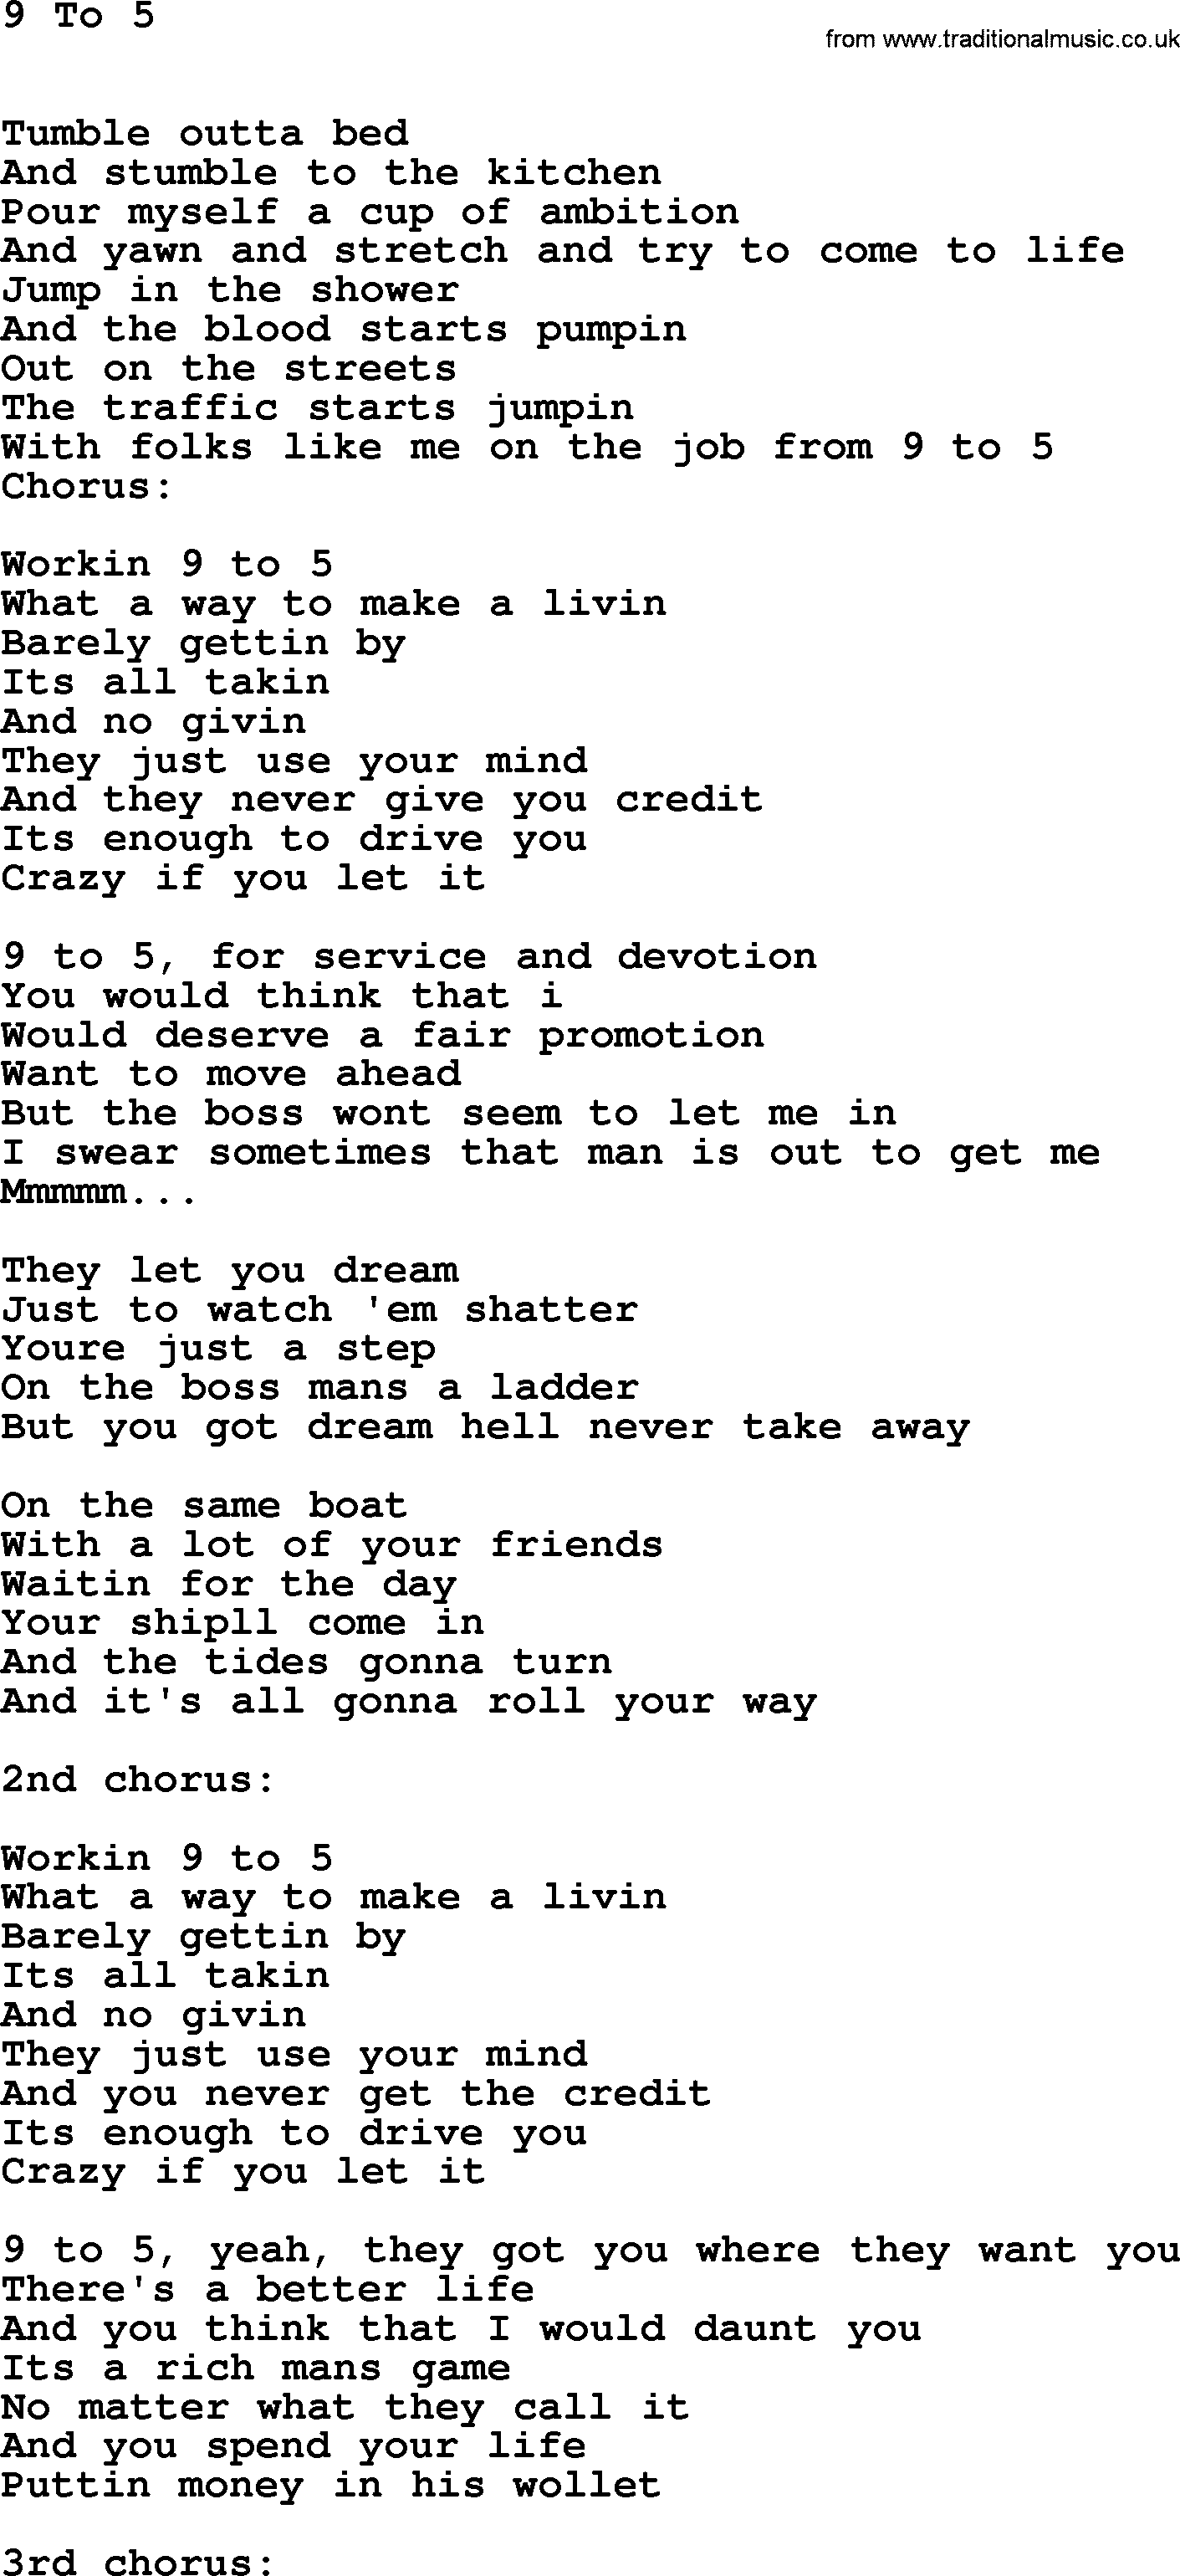 Dolly Parton song 9 To 5.txt lyrics